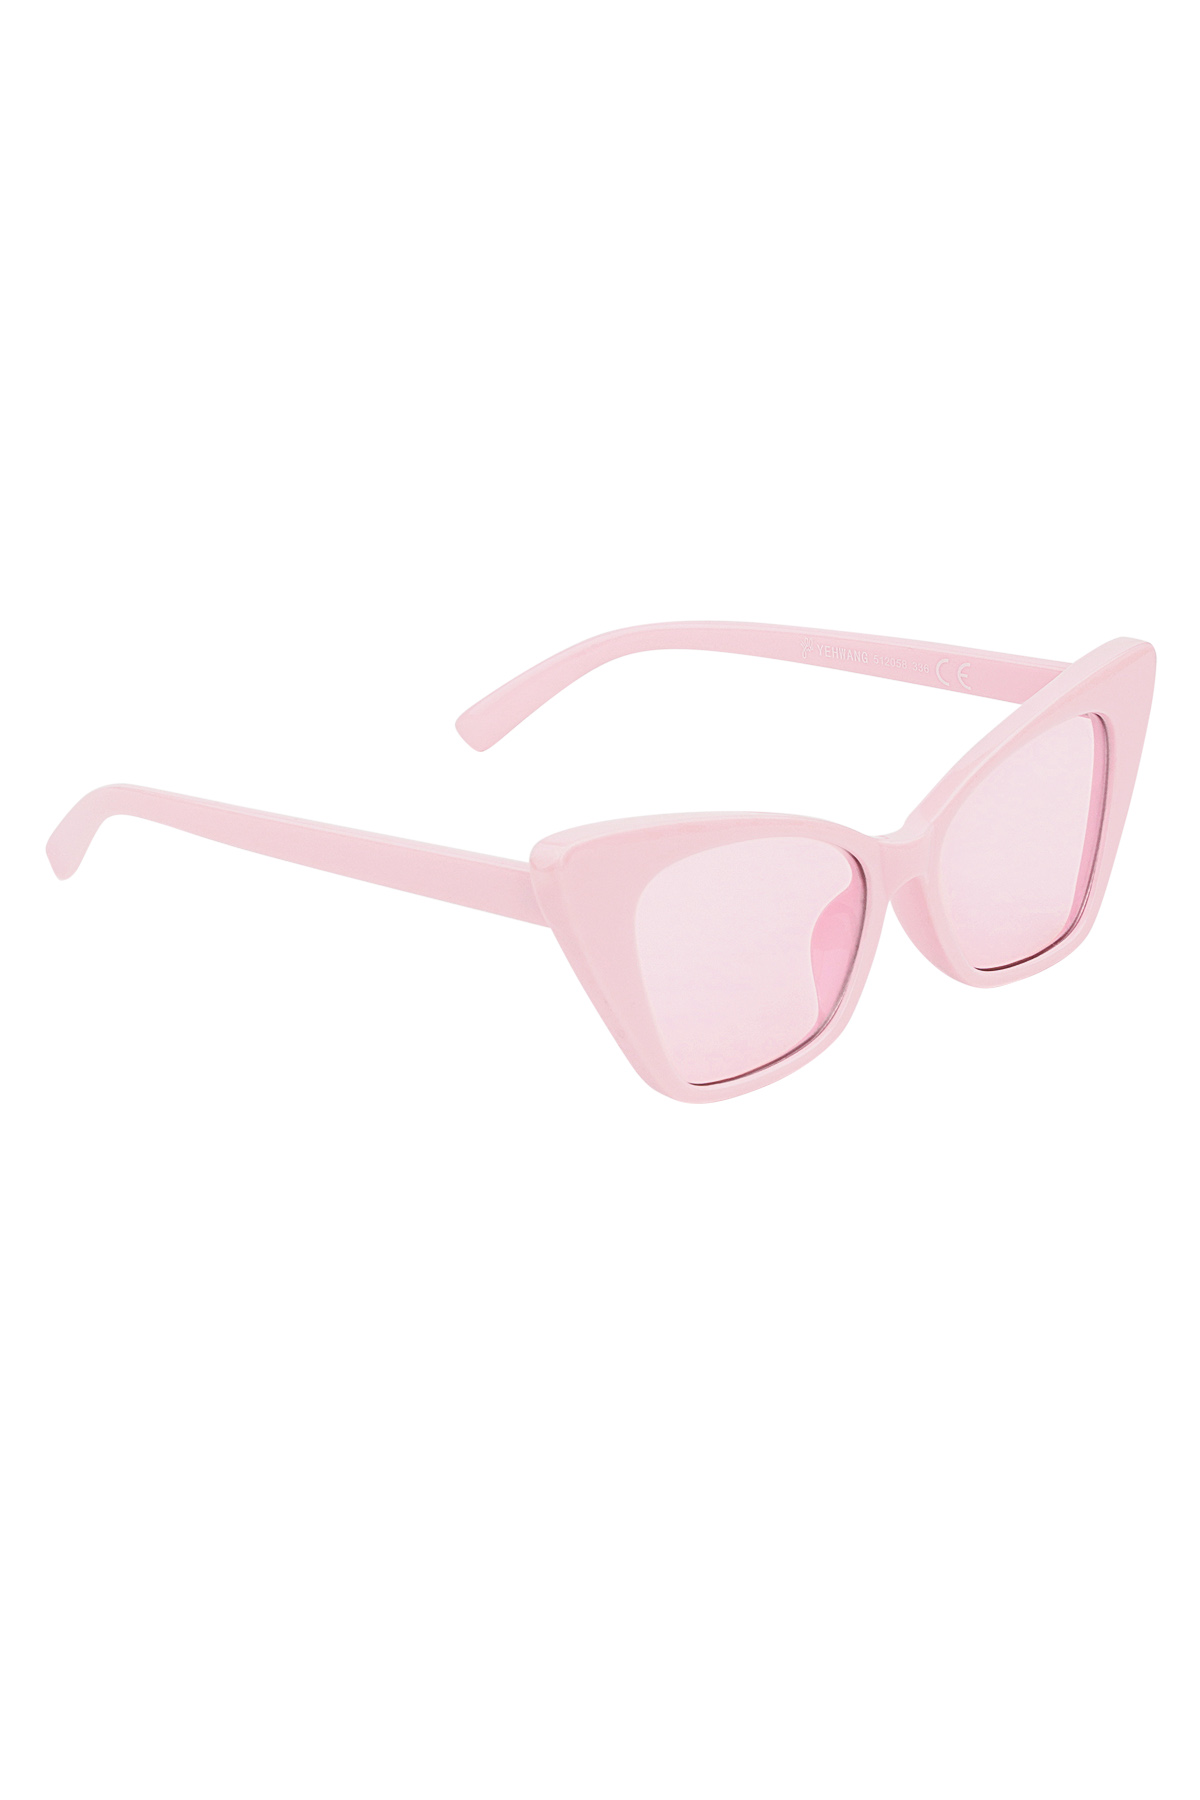 Sunglasses monochrome frame - pink h5 